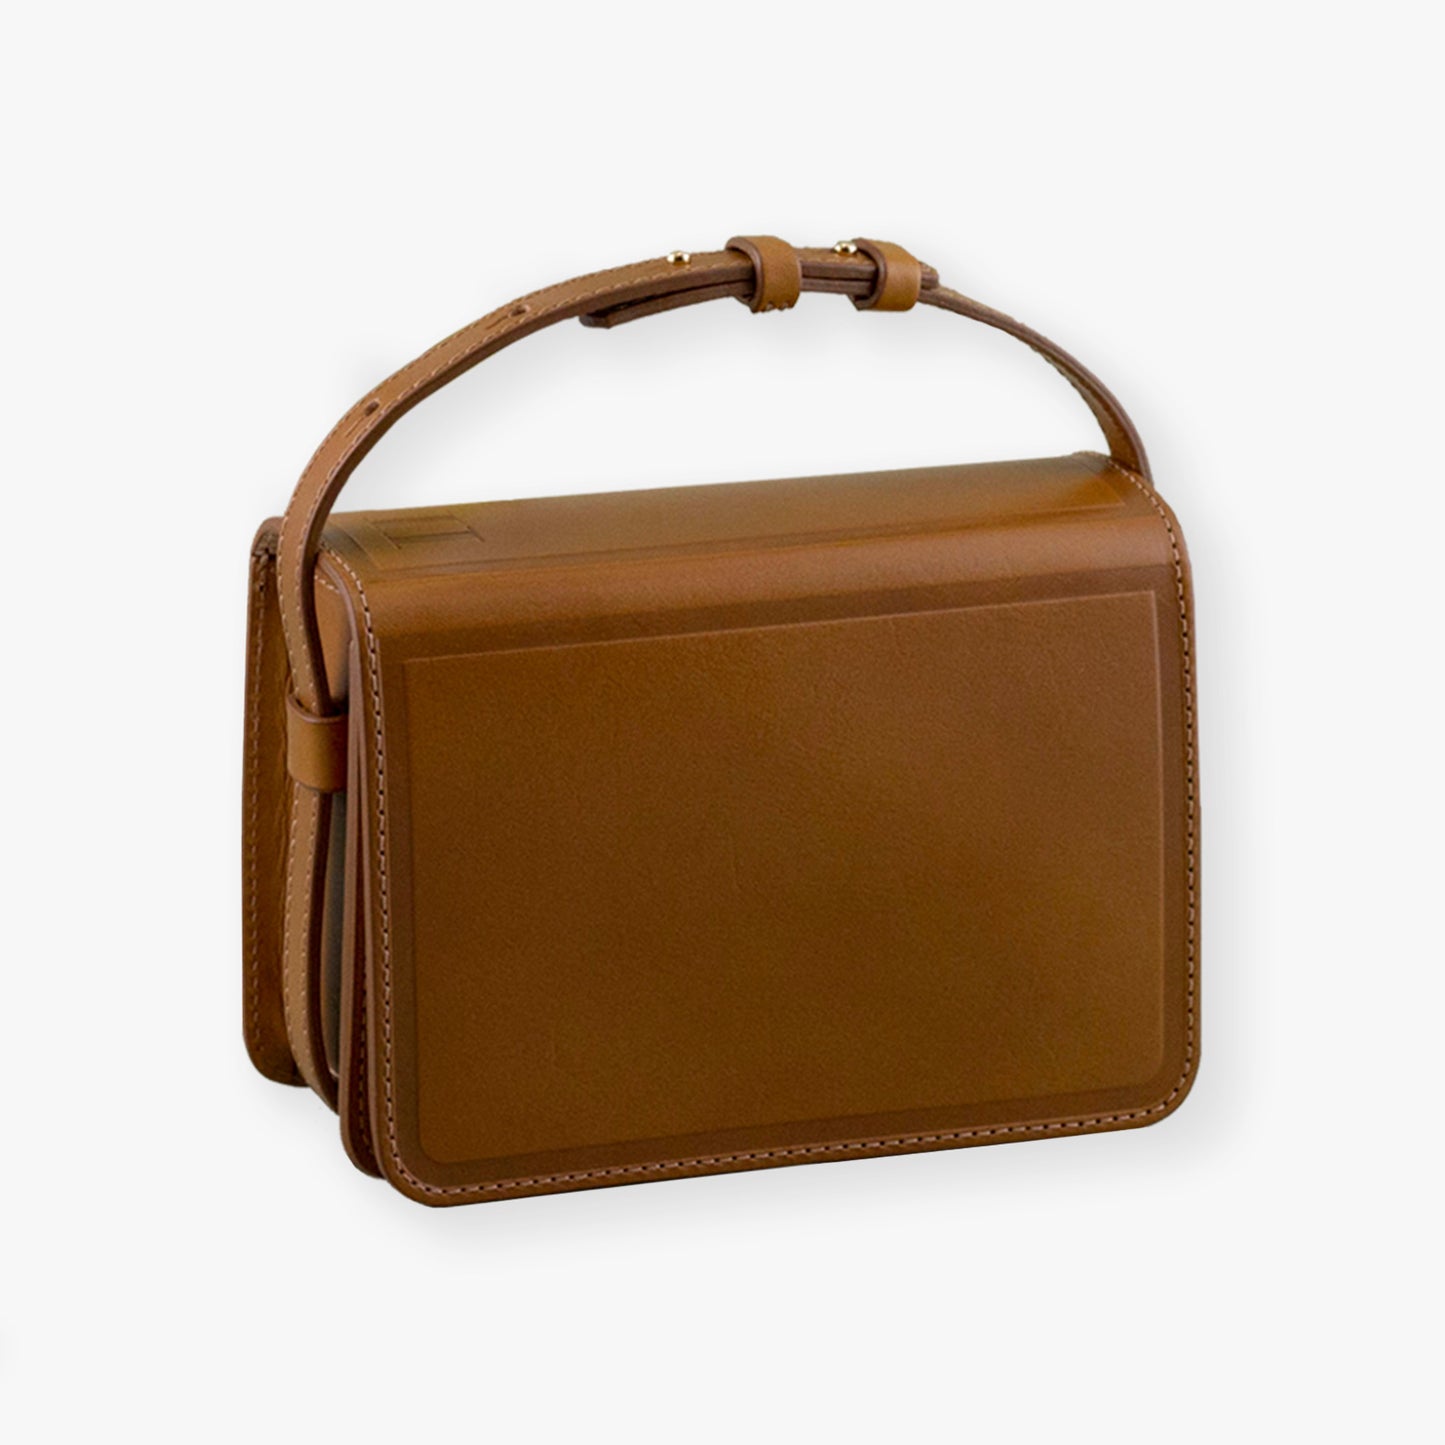 Douglas Ochre Leather Bag